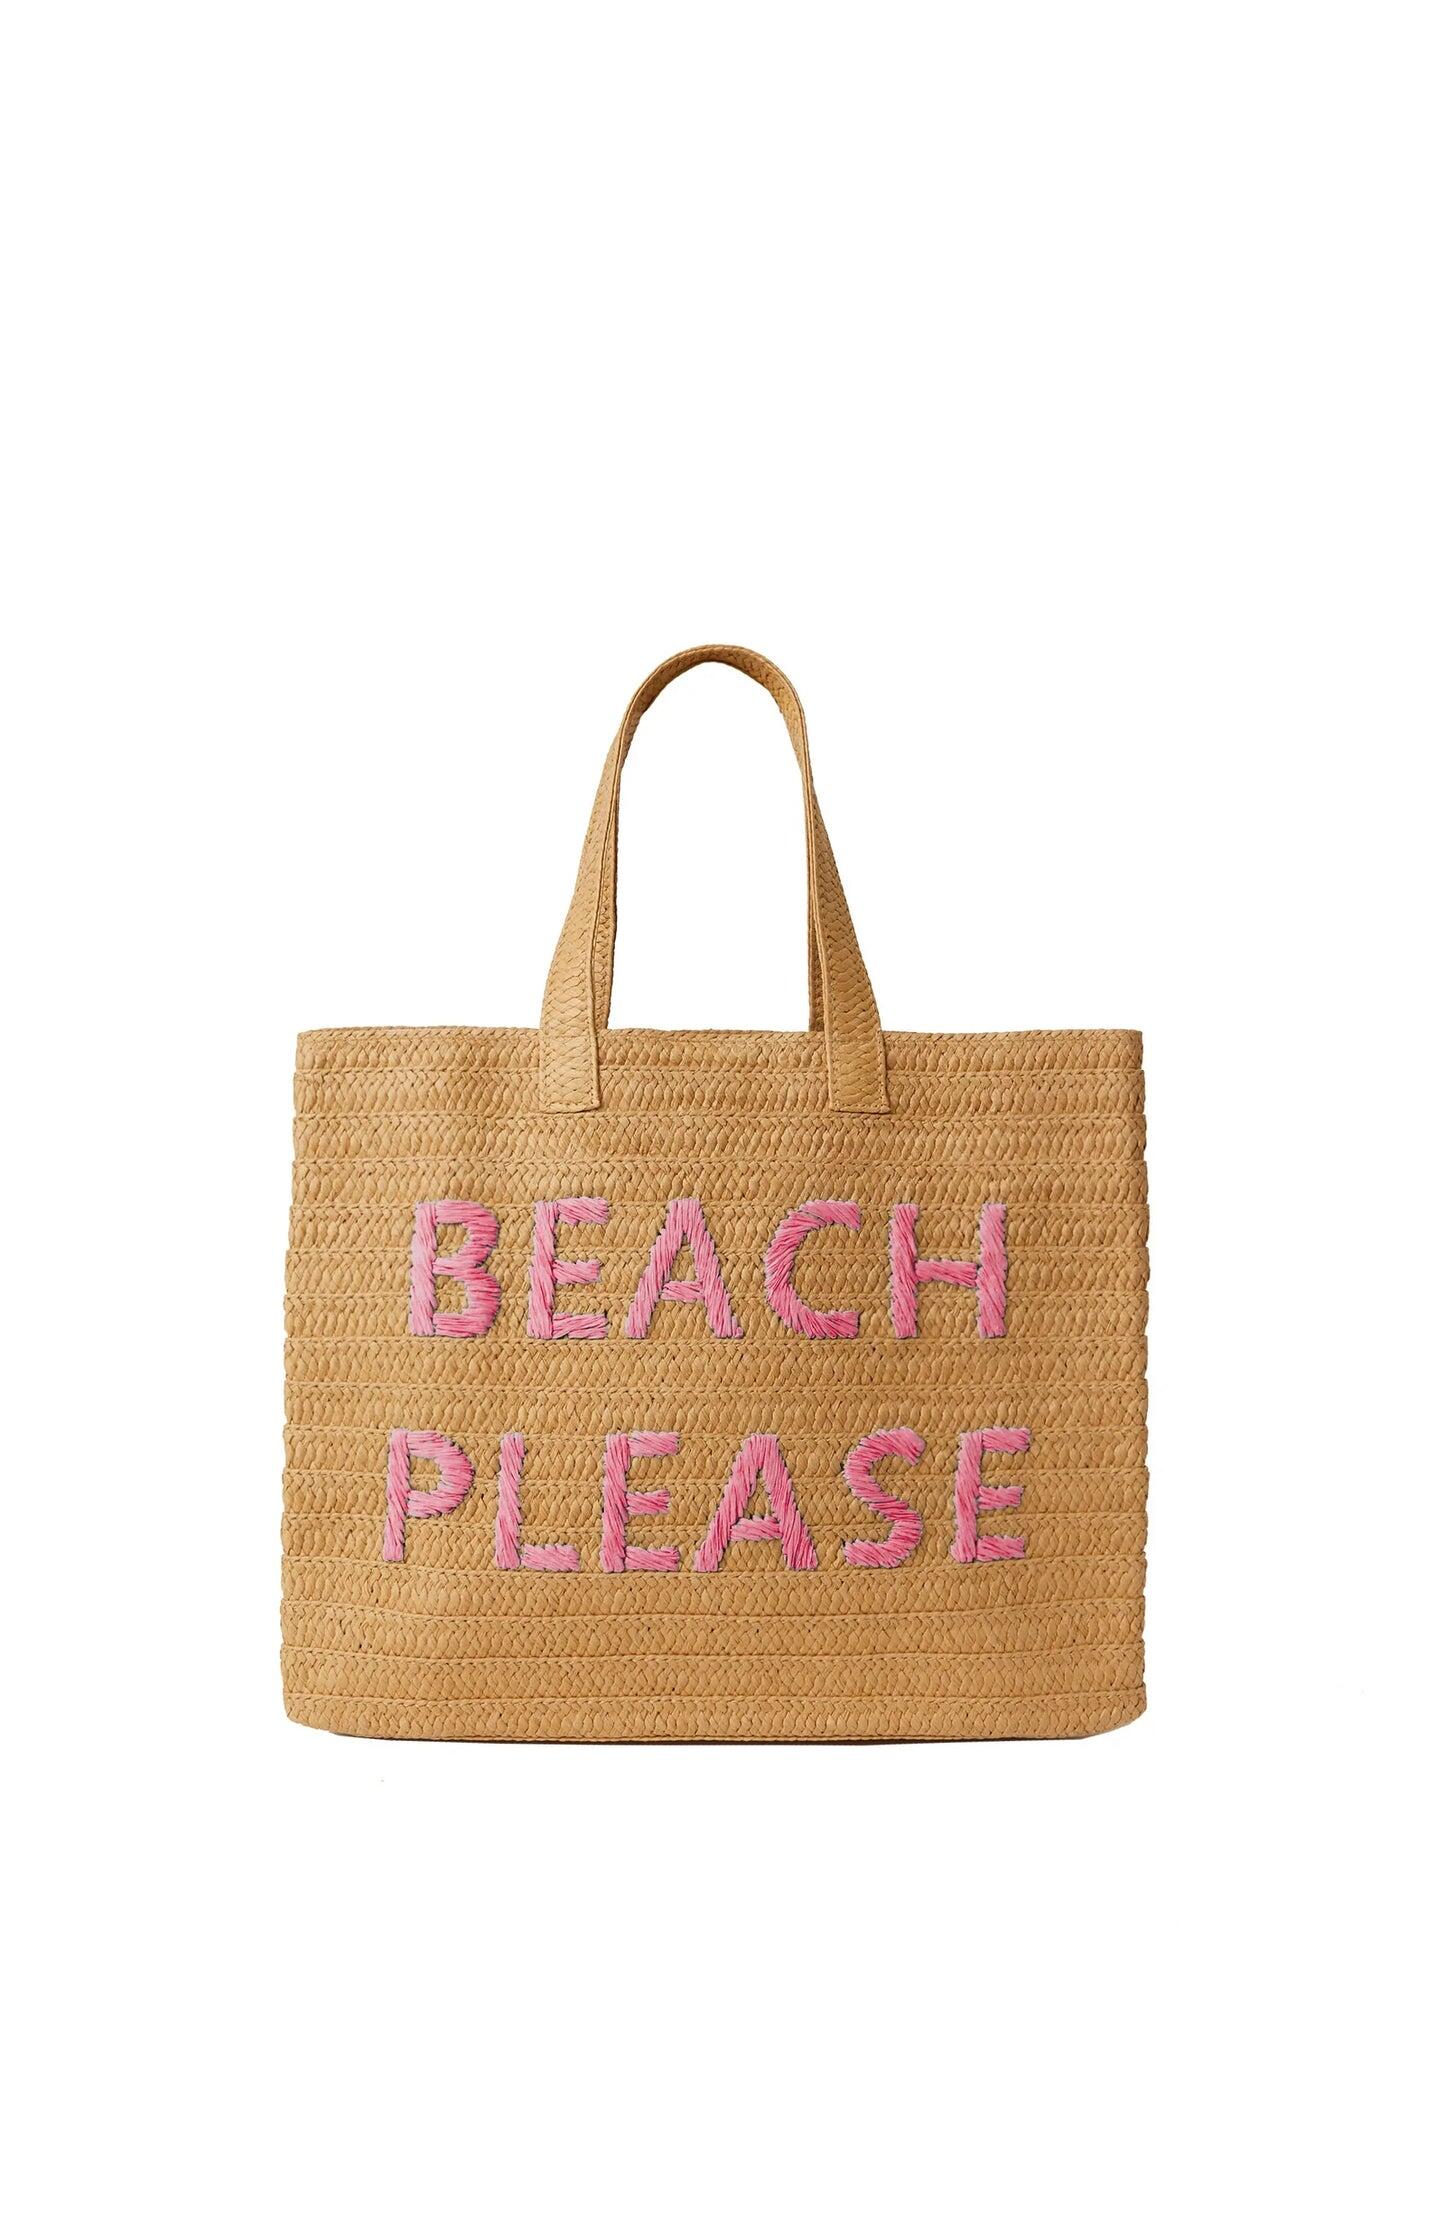 Beach Please Tote Sand/Fuchsia